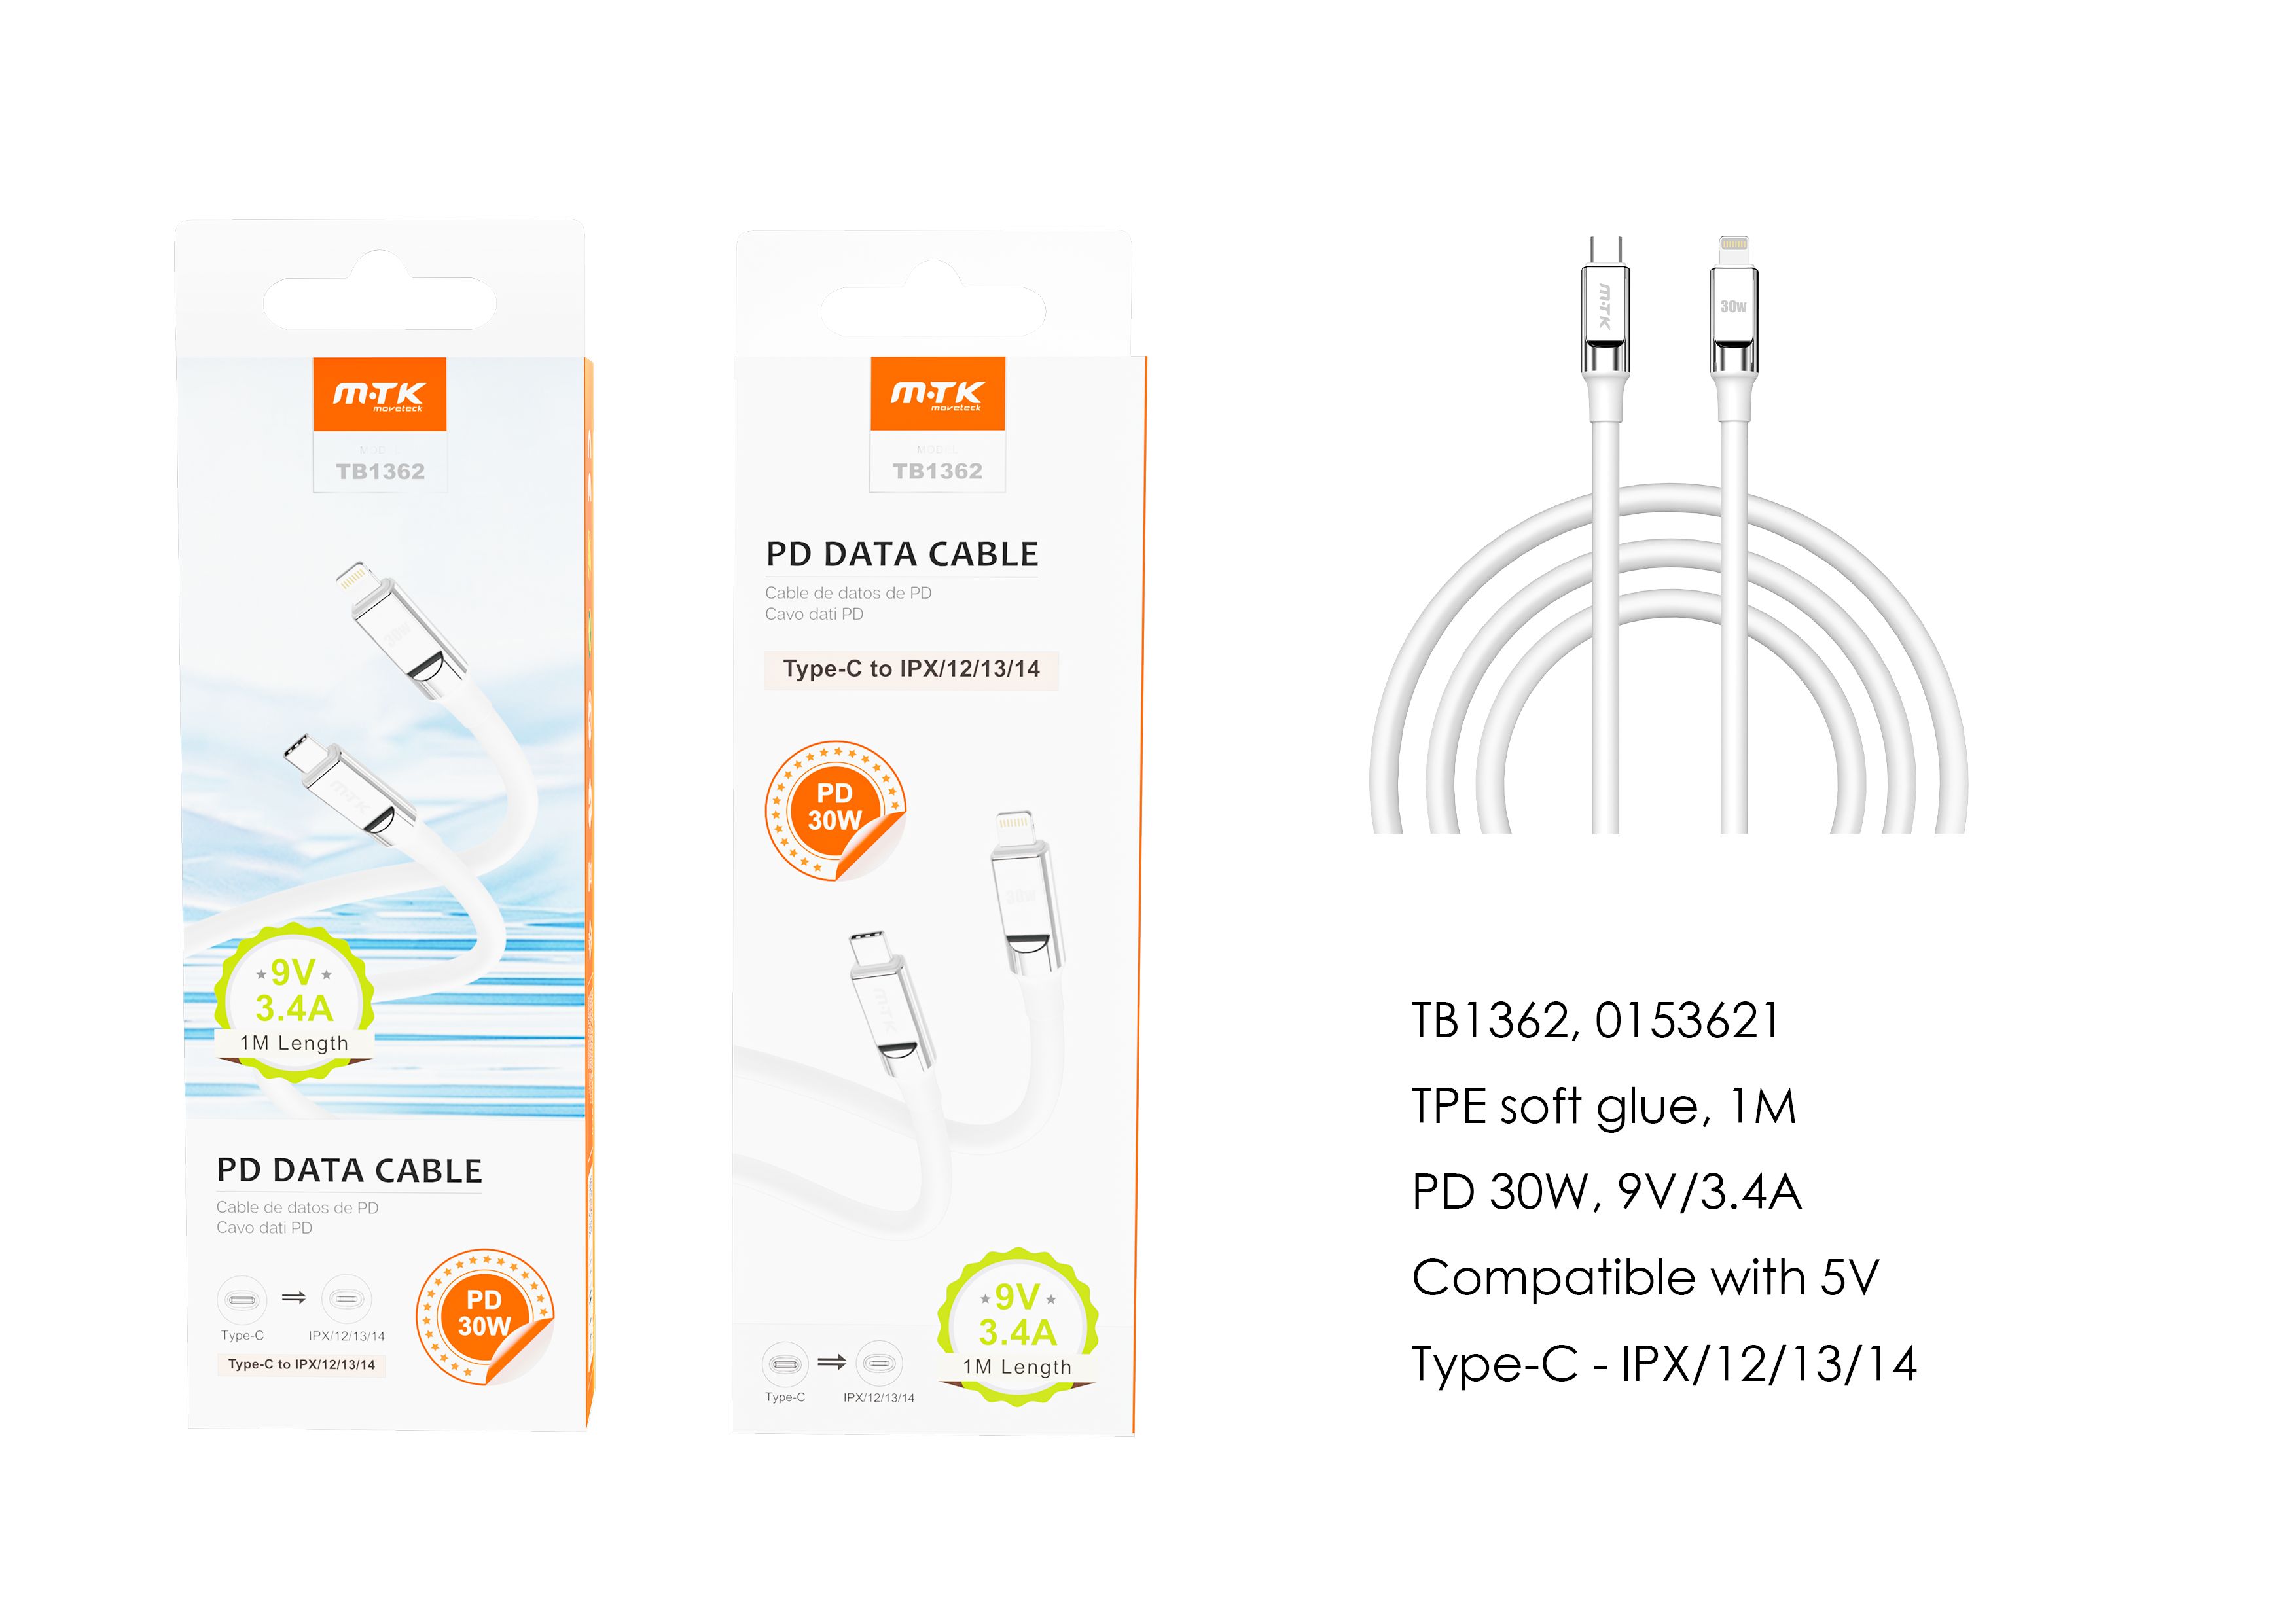 TB1362 BL Cable de datos Cyril para Type-C a Lightning , Carga Rapida PD, 30W/9V/3.4A, 1M, Blanco